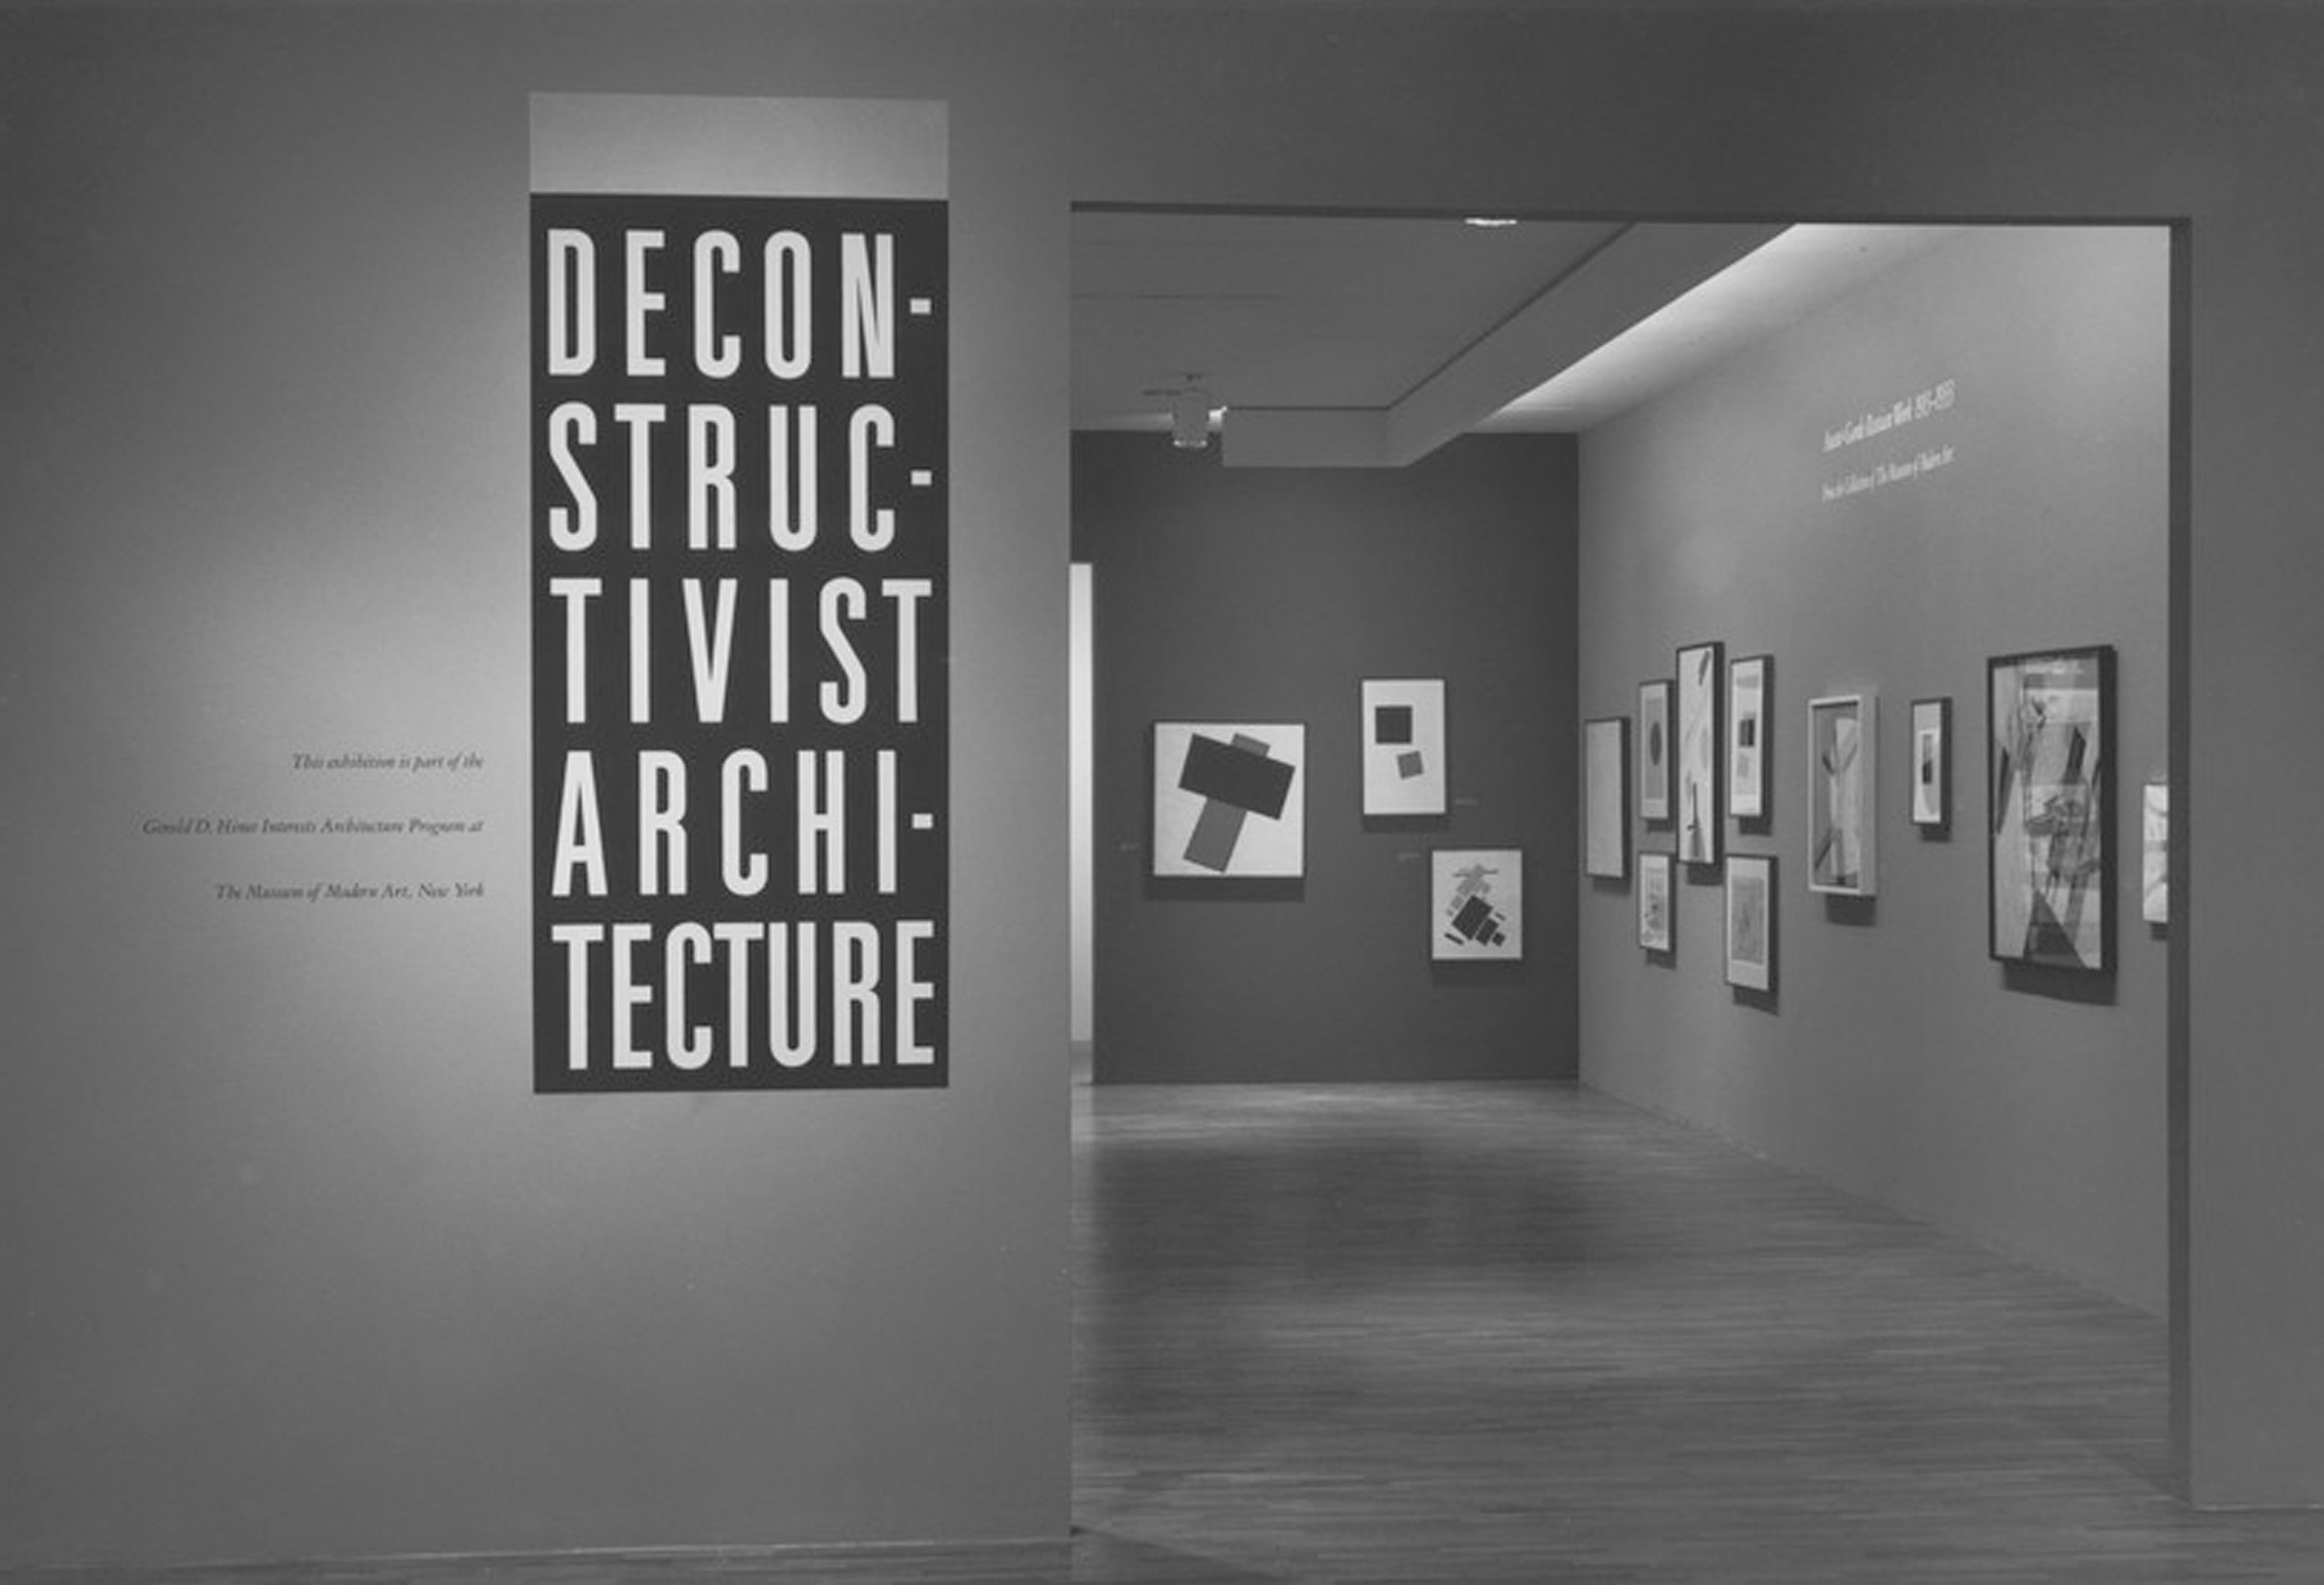 Deconstructivist architecture exhibition at the MoMA